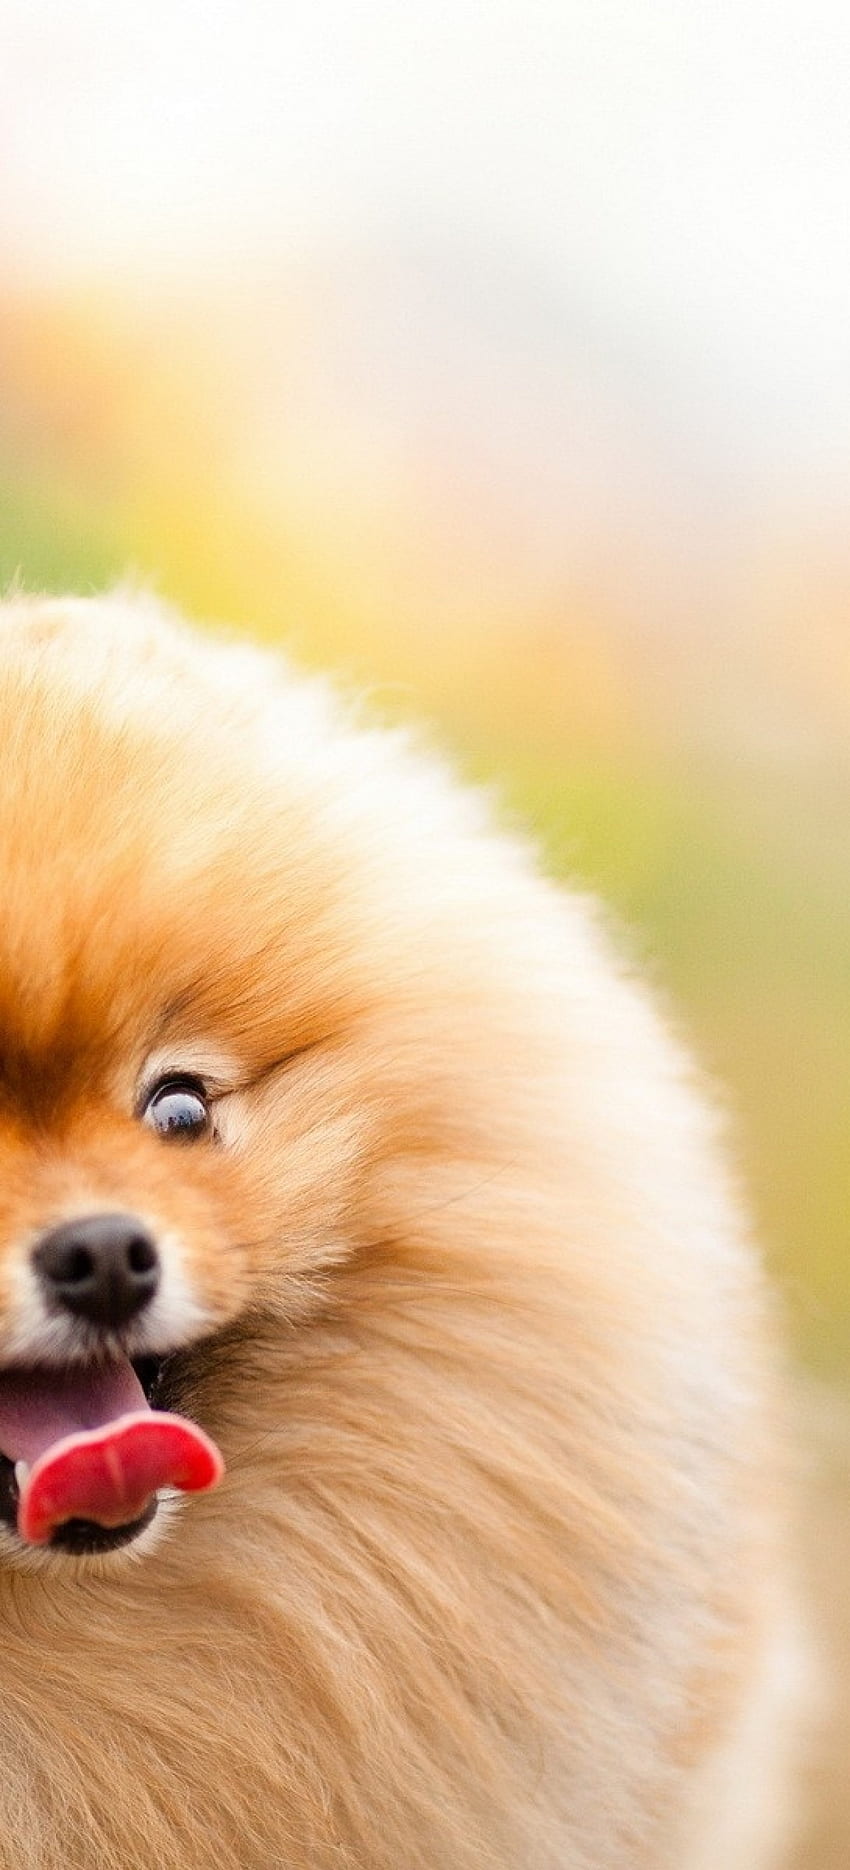 Pomerania, esponjoso, lindo, perros para OnePlus 8 Pro, Oppo Find X2, lindos perros esponjosos fondo de pantalla del teléfono